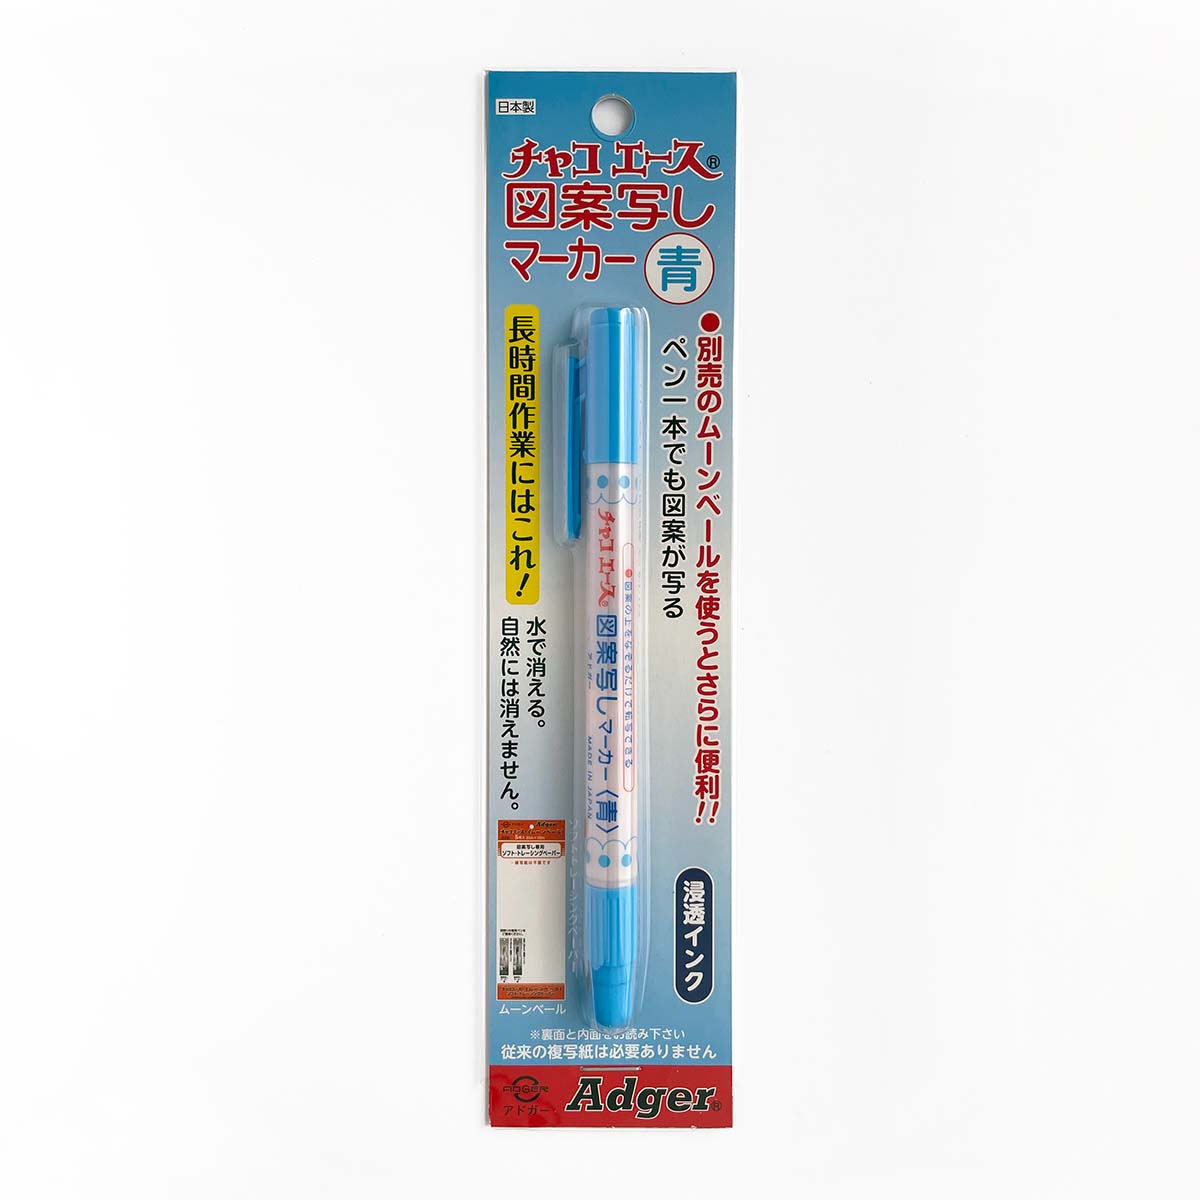 Water Soluble Fabric Pen, Water Erasable Pen 